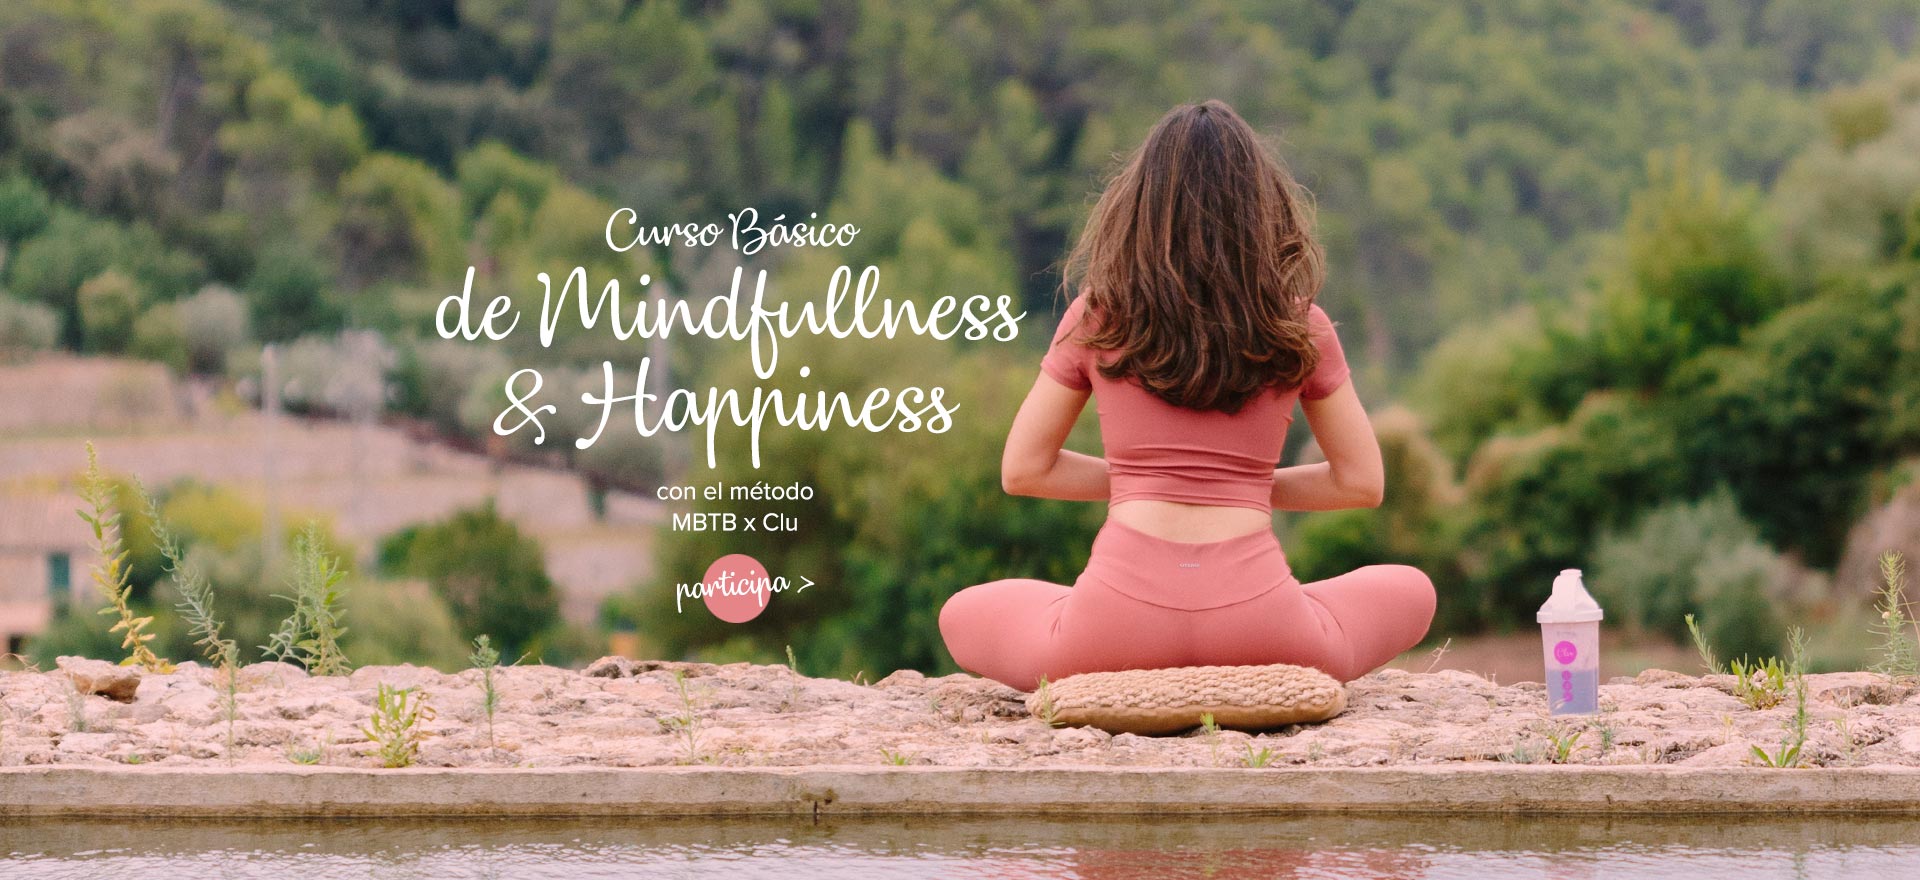 Meditar Mindfulness: Curso Básico de Mindfullness + Happiness
